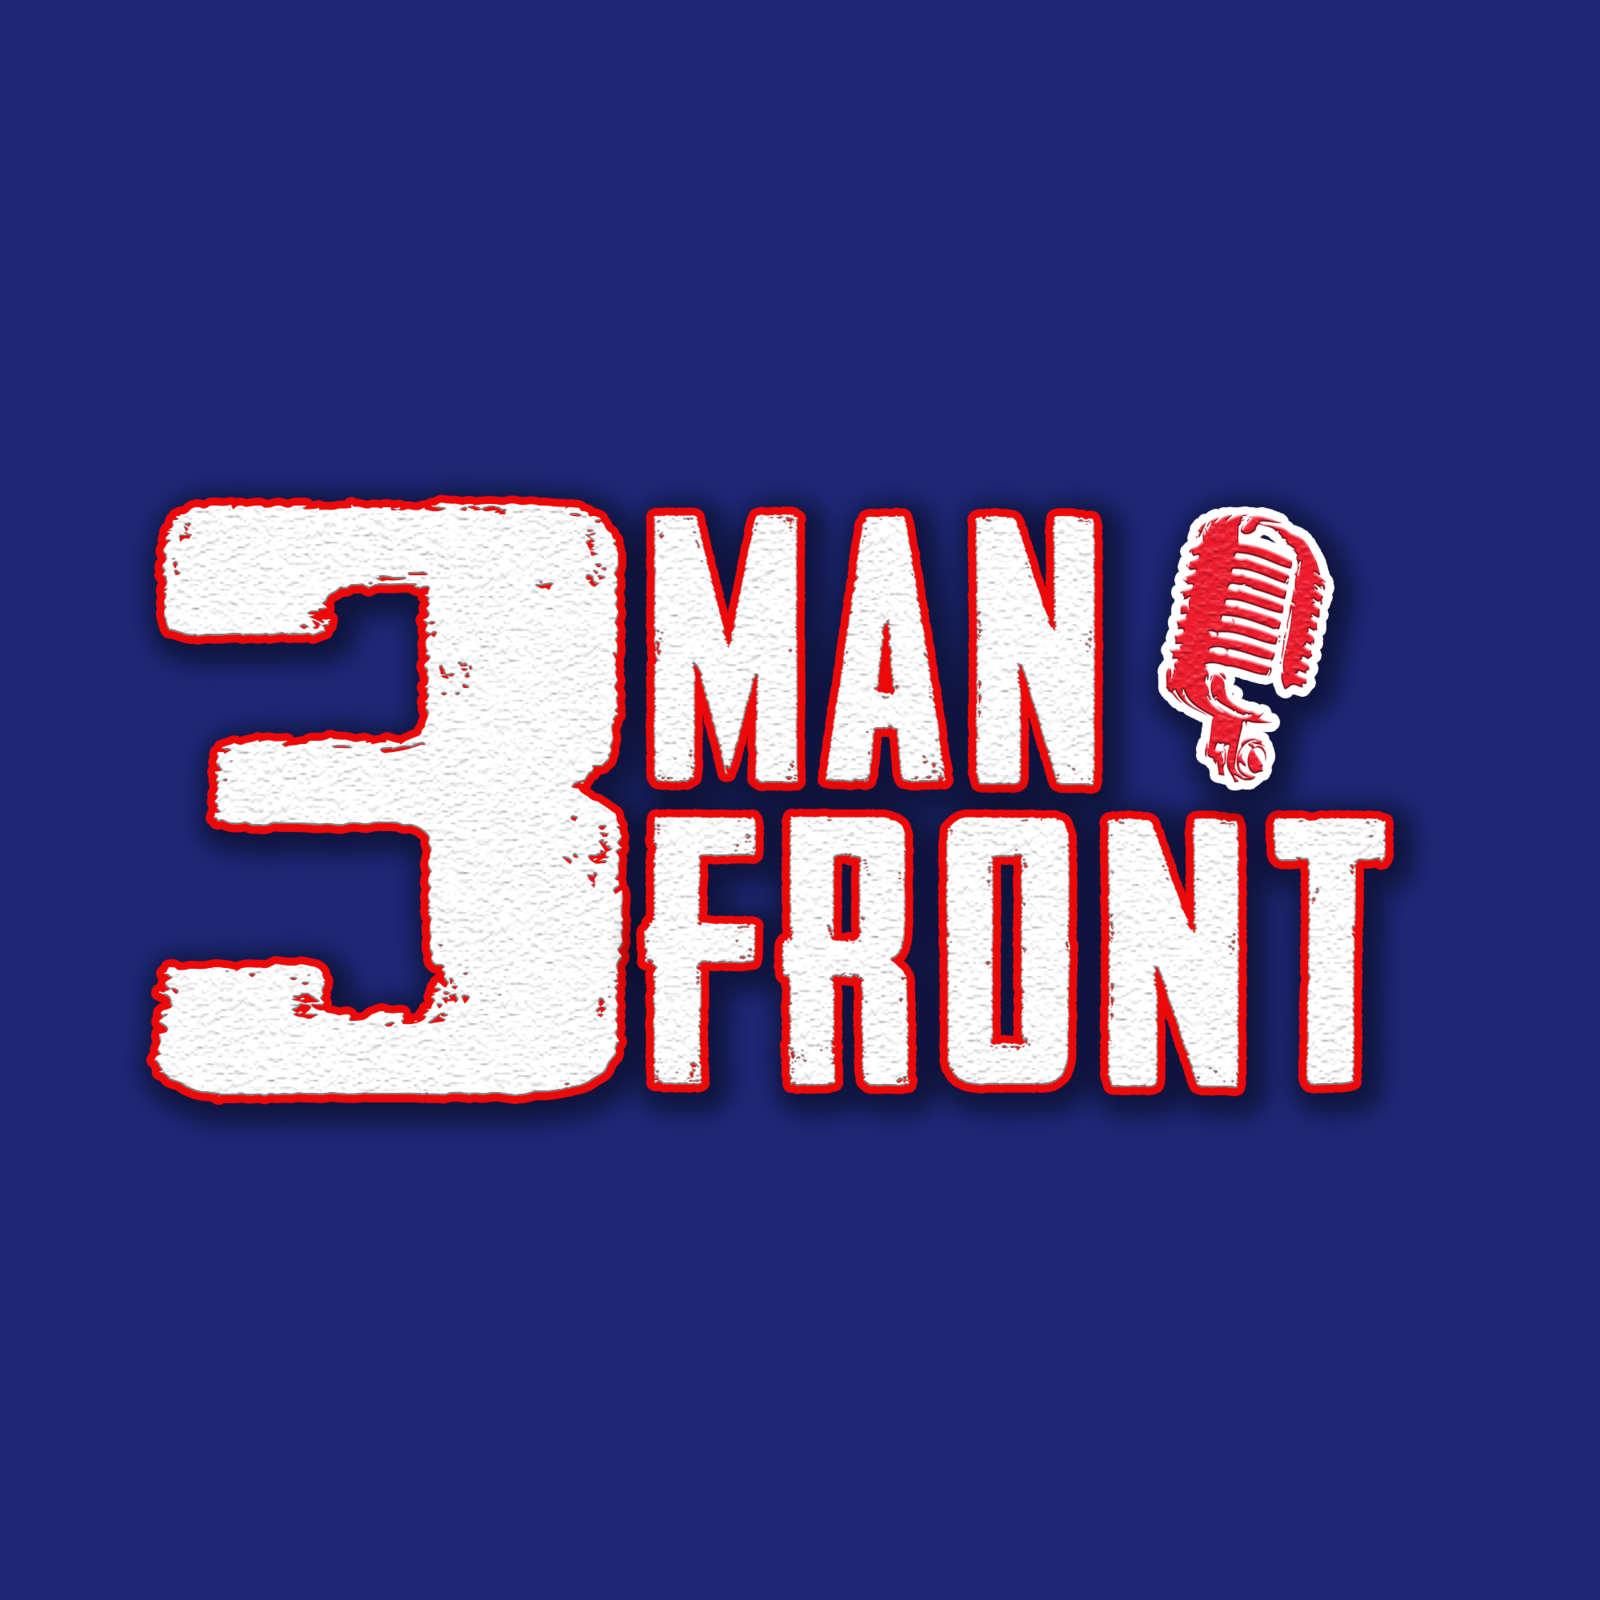 3 Man Front: Jeffrey Lee discusses the latest Auburn recruiting buzz